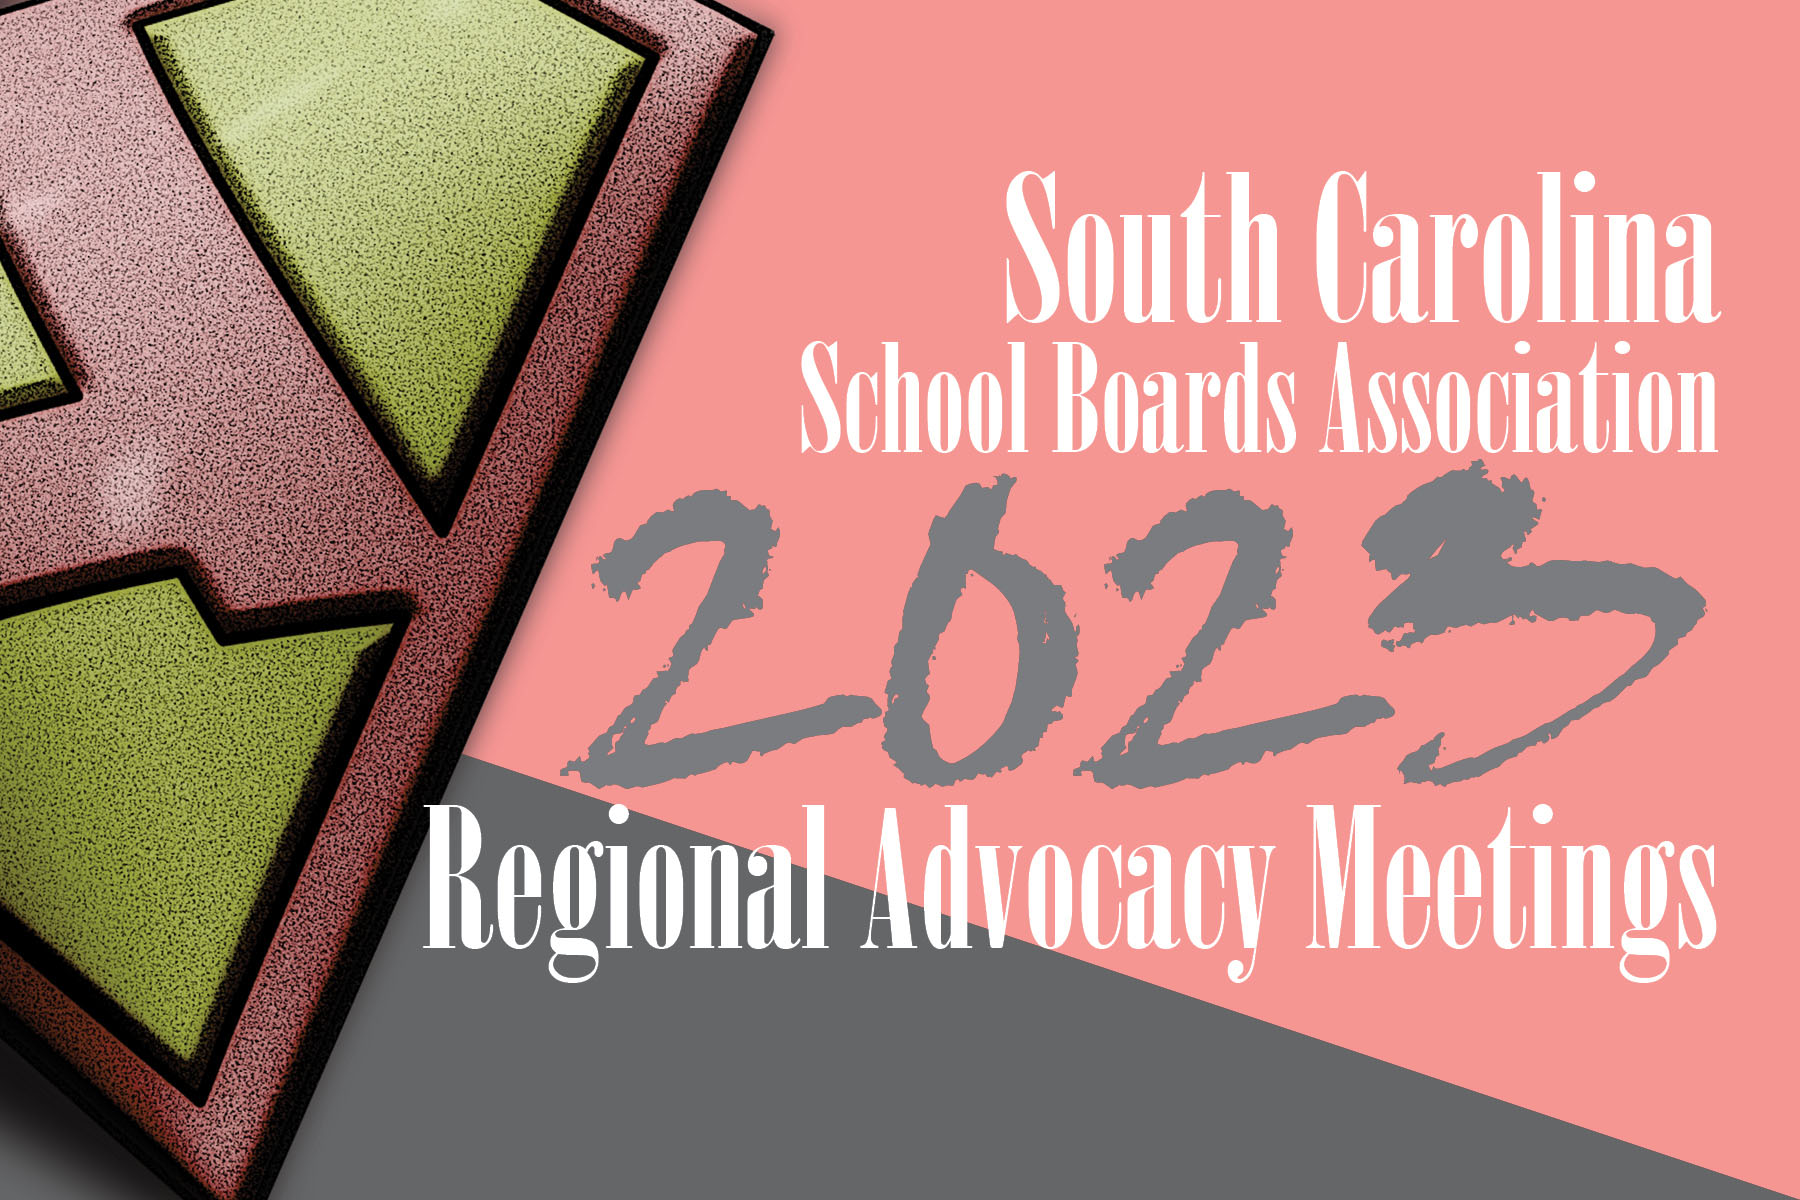 2023 REGIONAL ADVOCACY MEETINGS